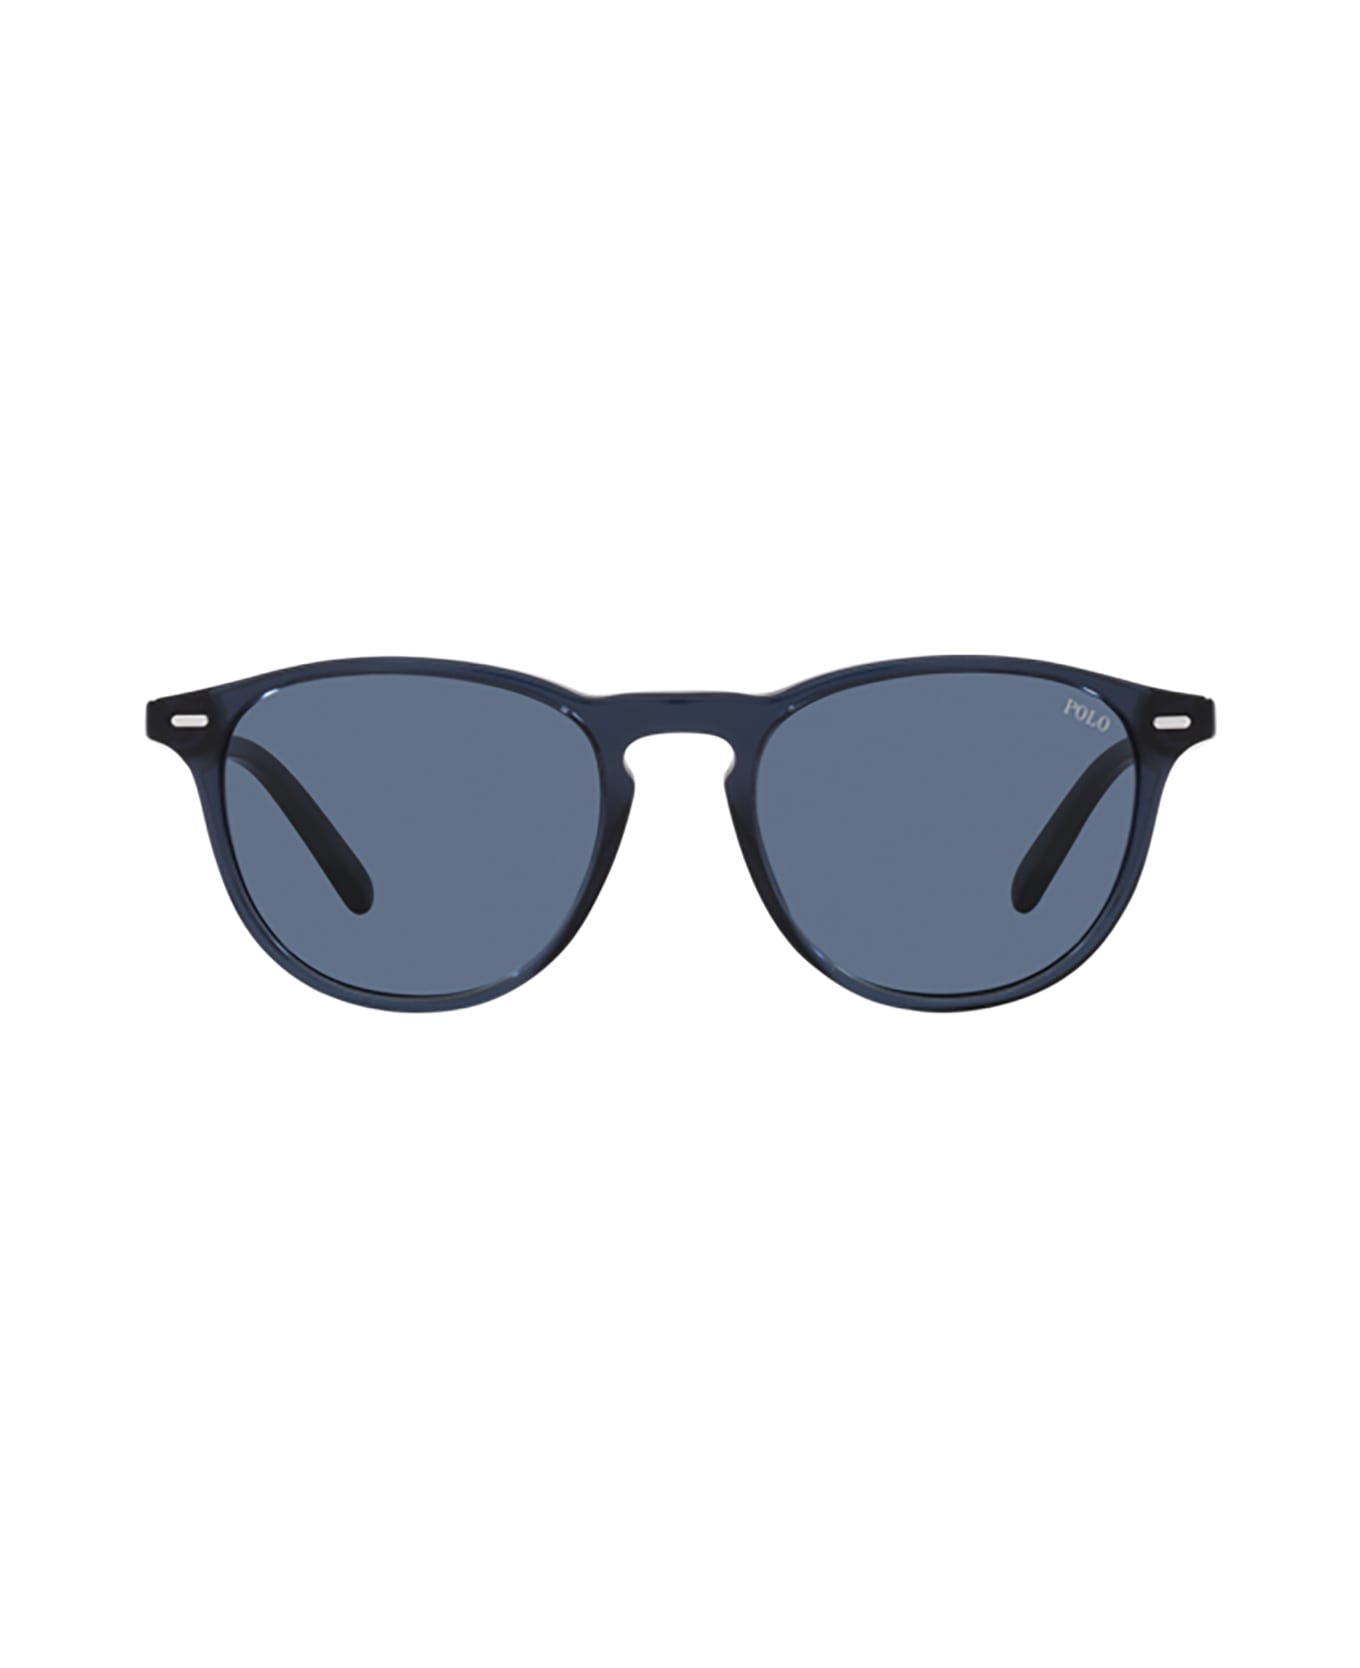 Polo Ralph Lauren Ph4181 Shiny Transparent Navy Blue Sunglasses - Shiny transparent navy blue